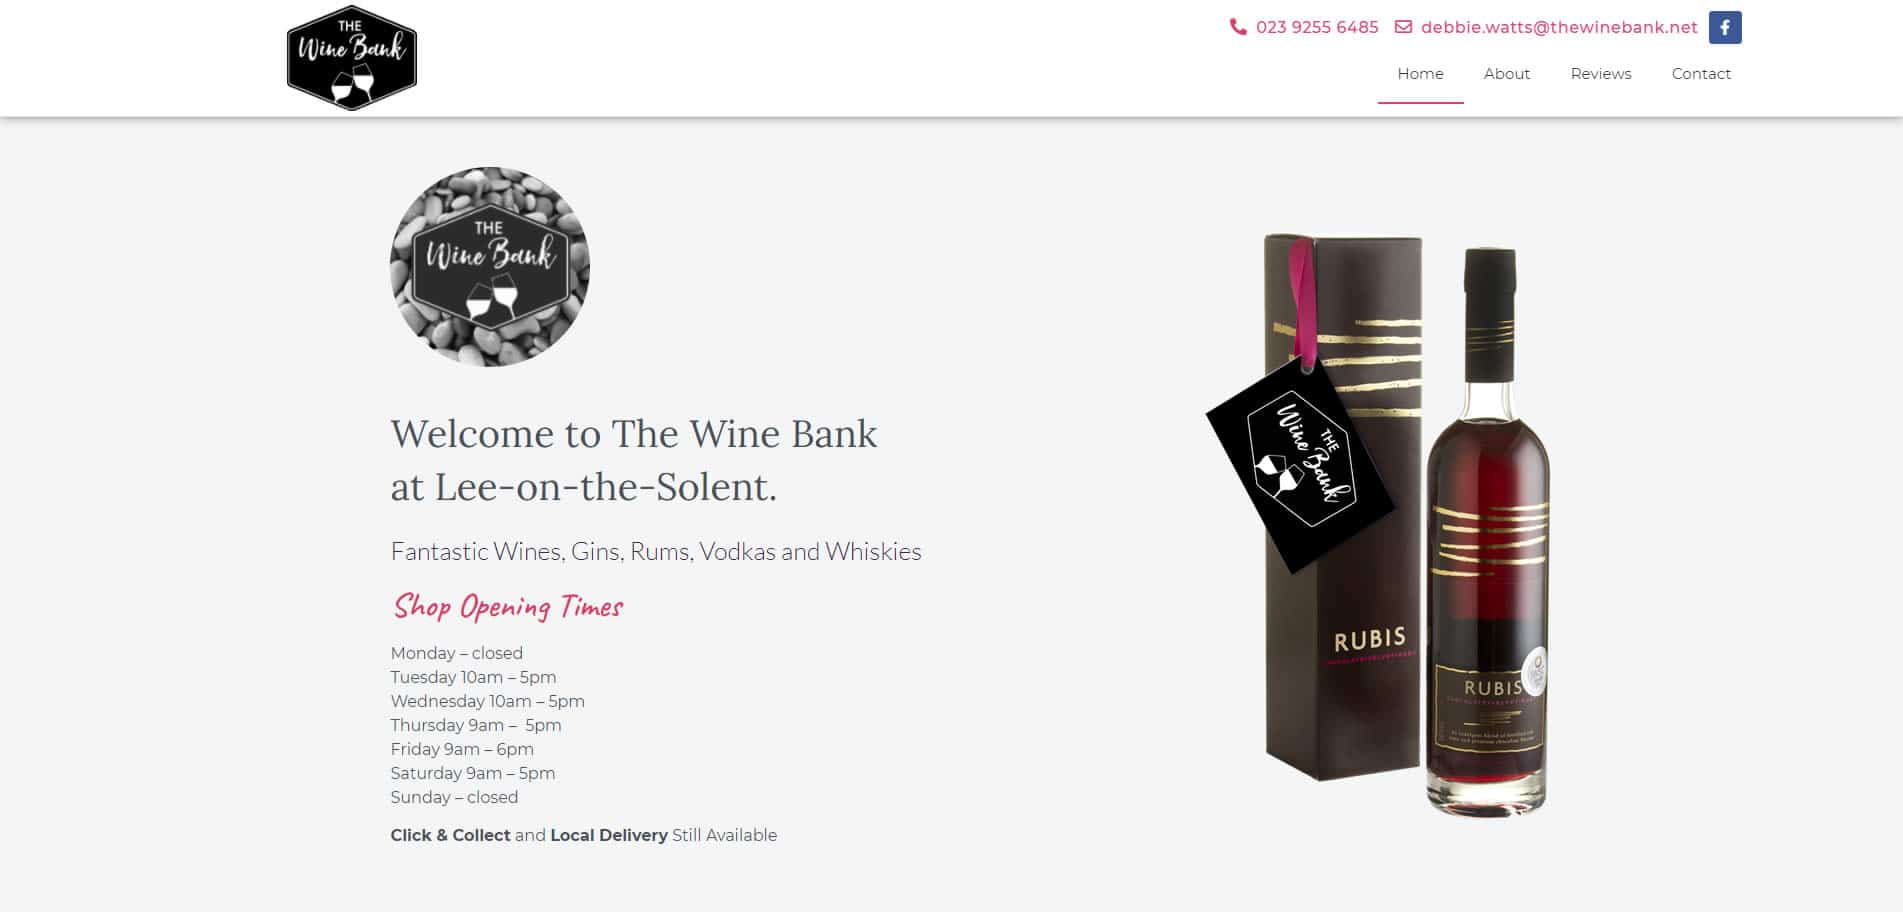 The Wine Bank